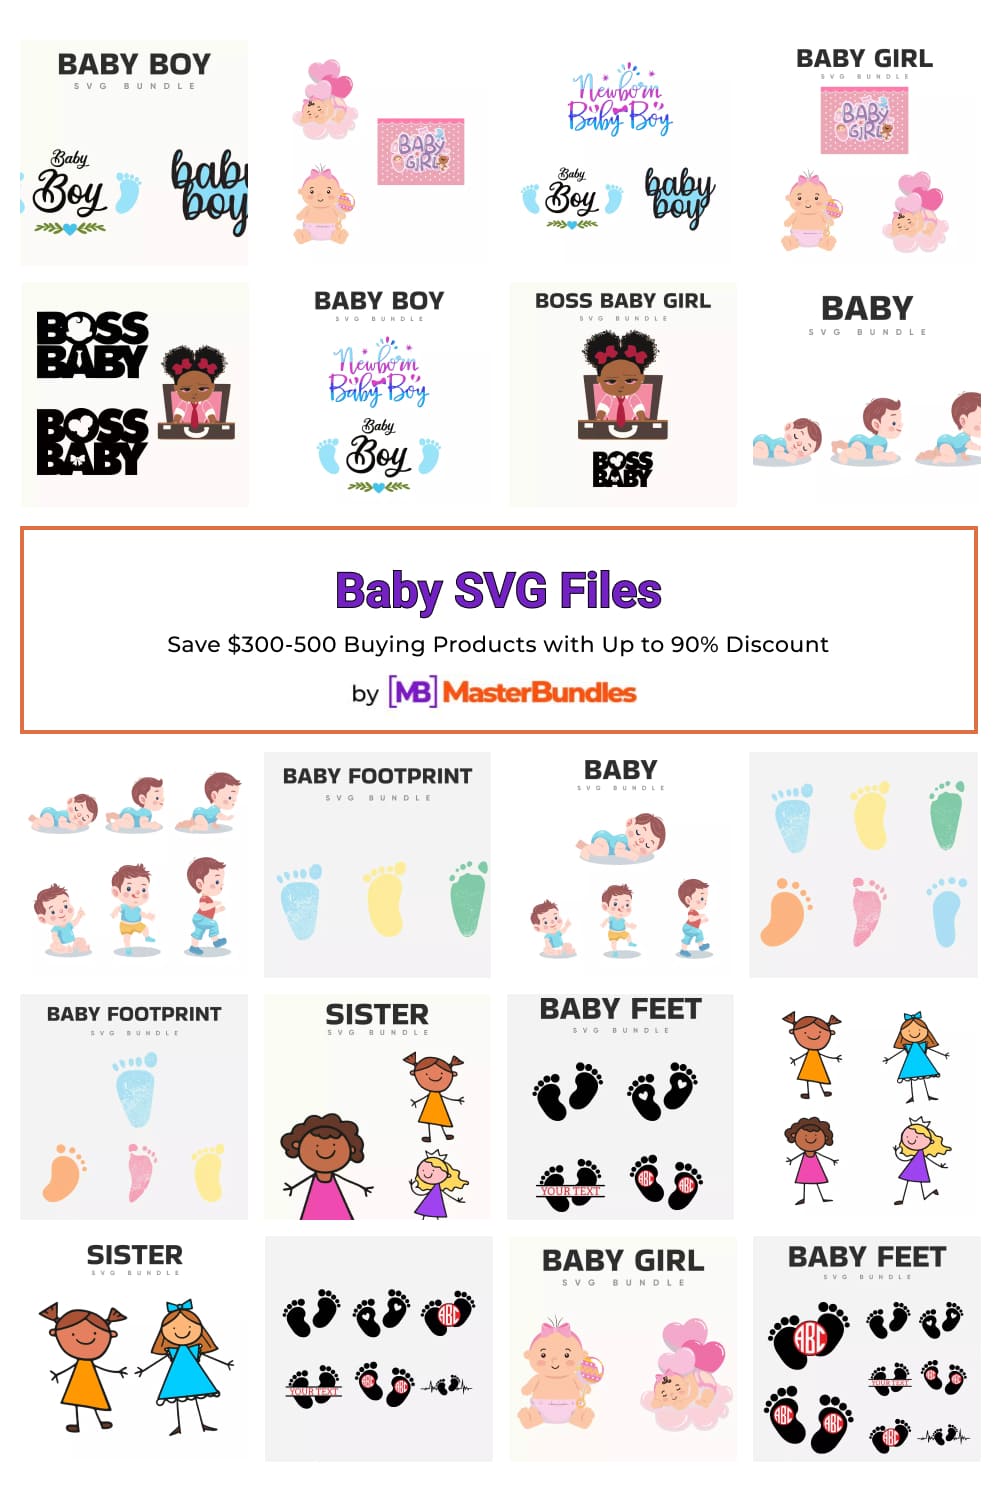 Baby SVG Files Pinterest image.